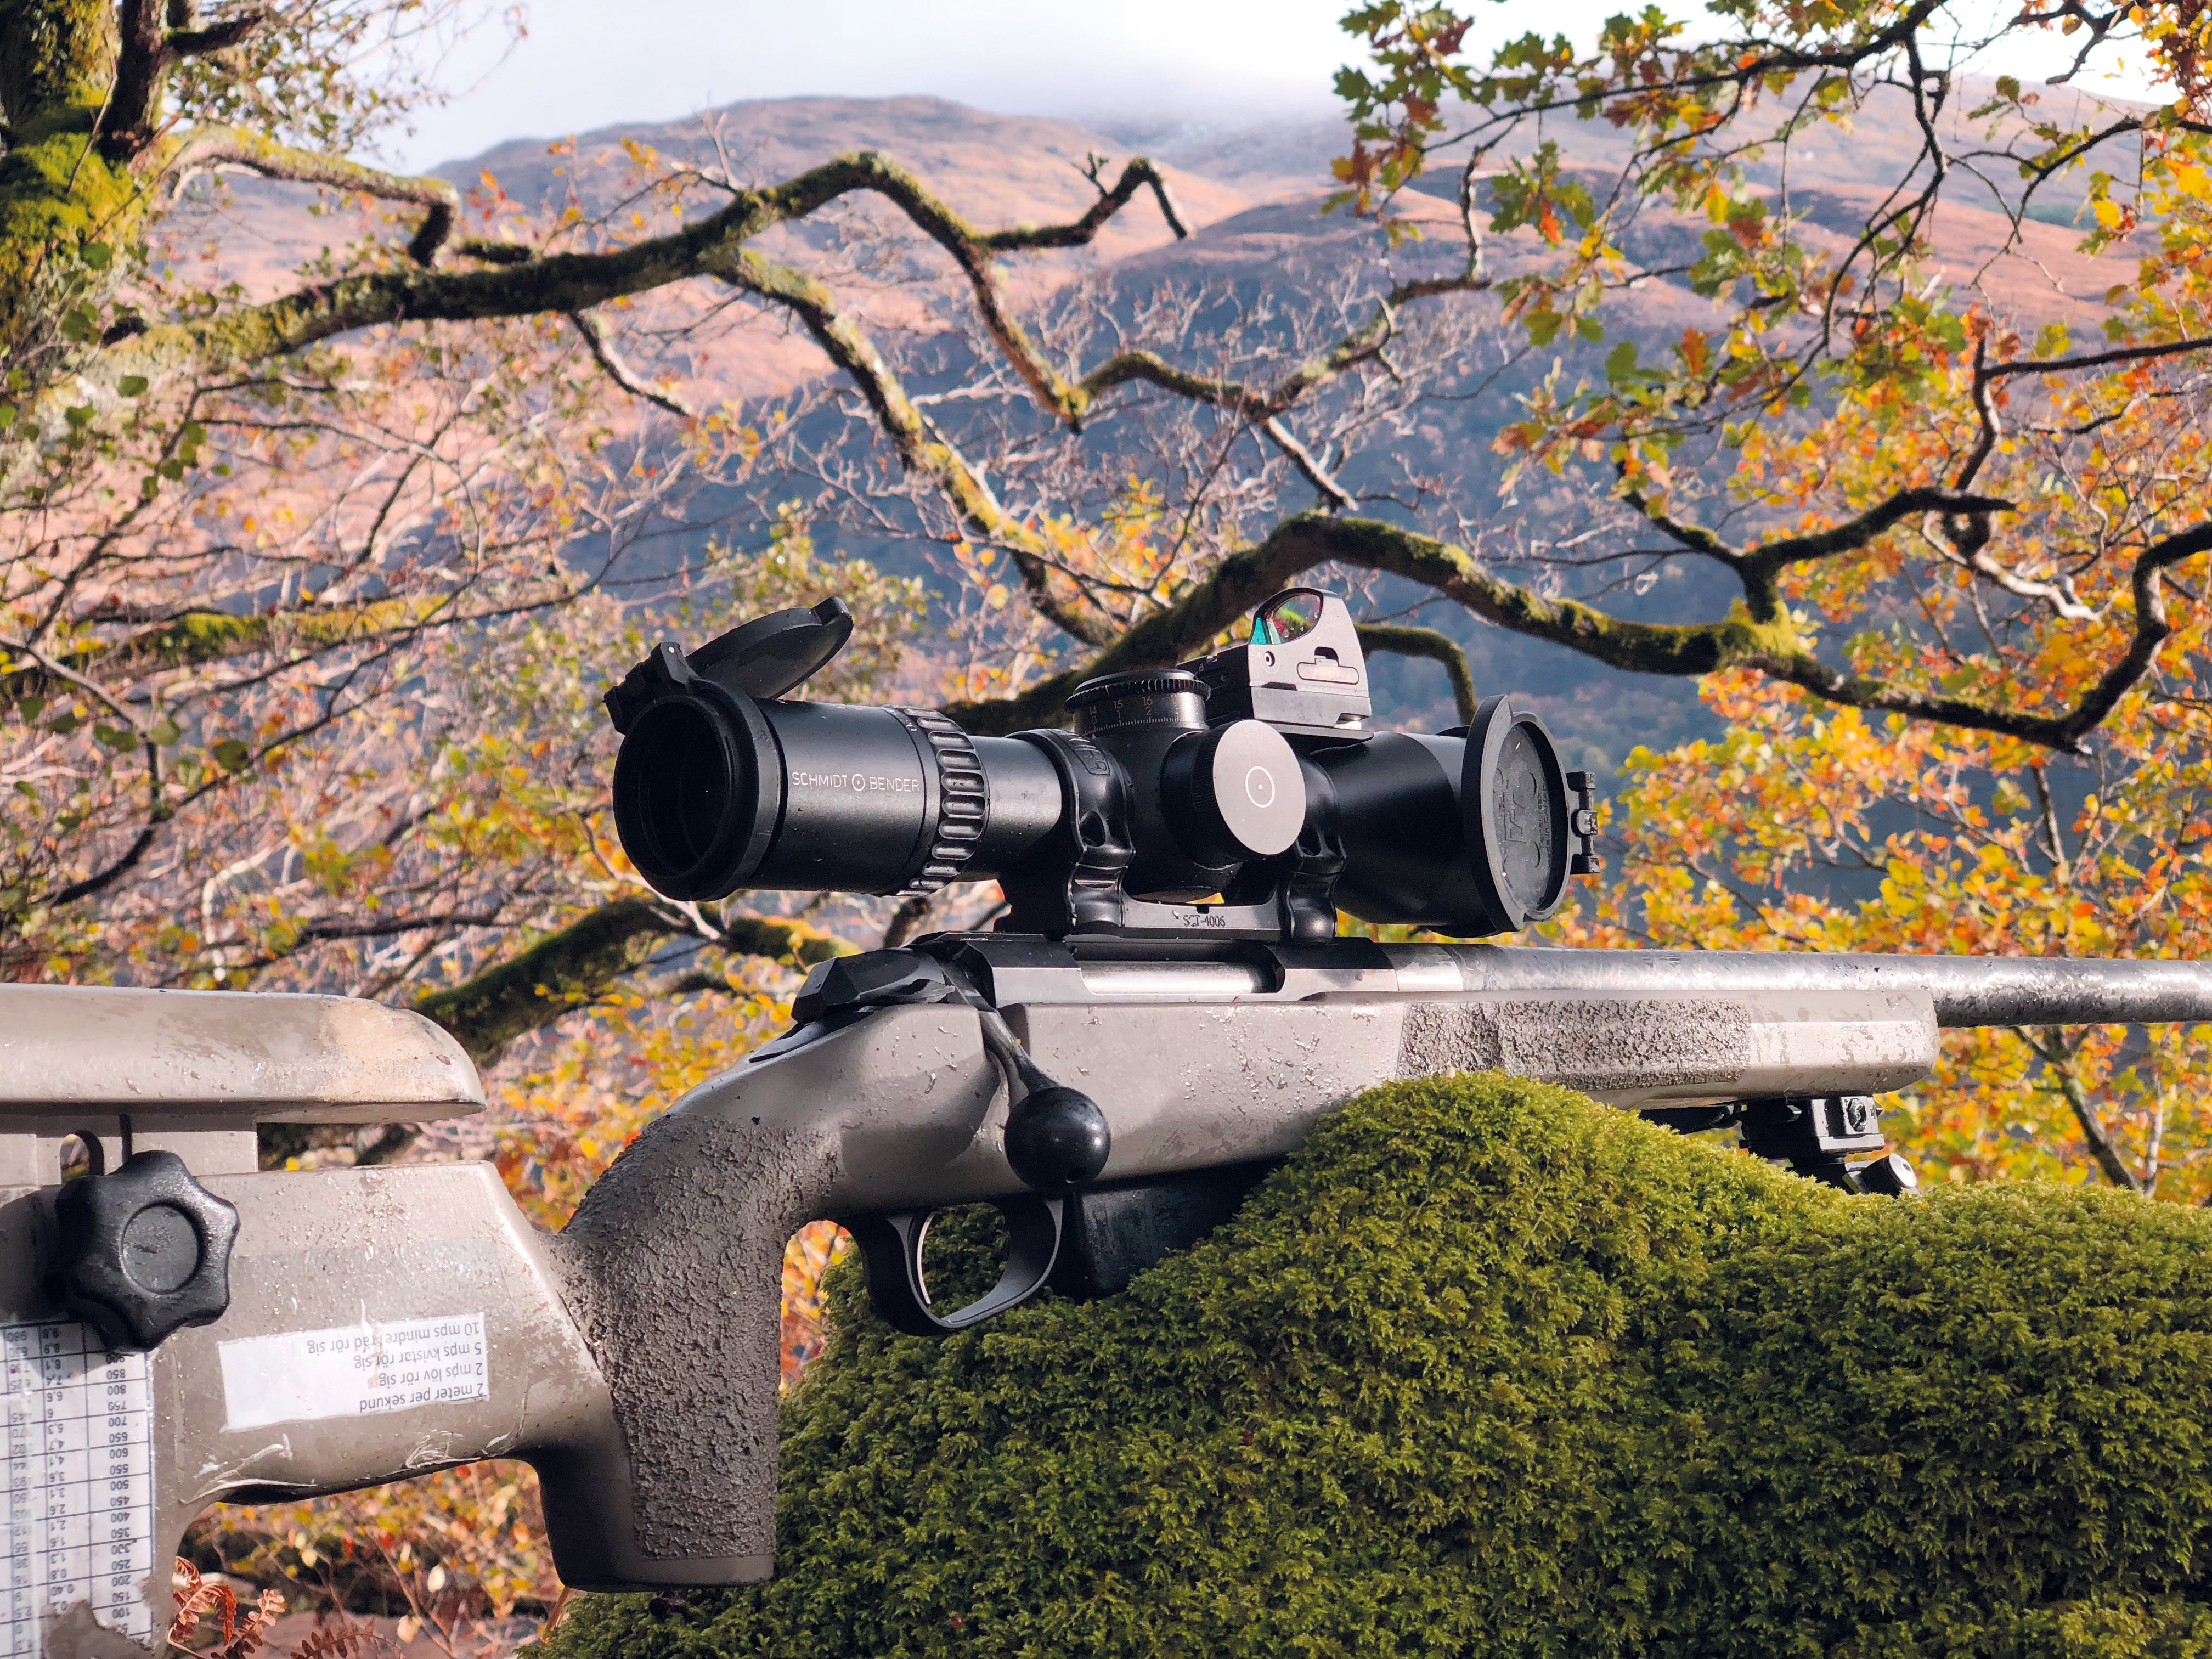 General 4032x3024 weapon sniper rifle rifles hunting gun hunting rifle branch sunlight